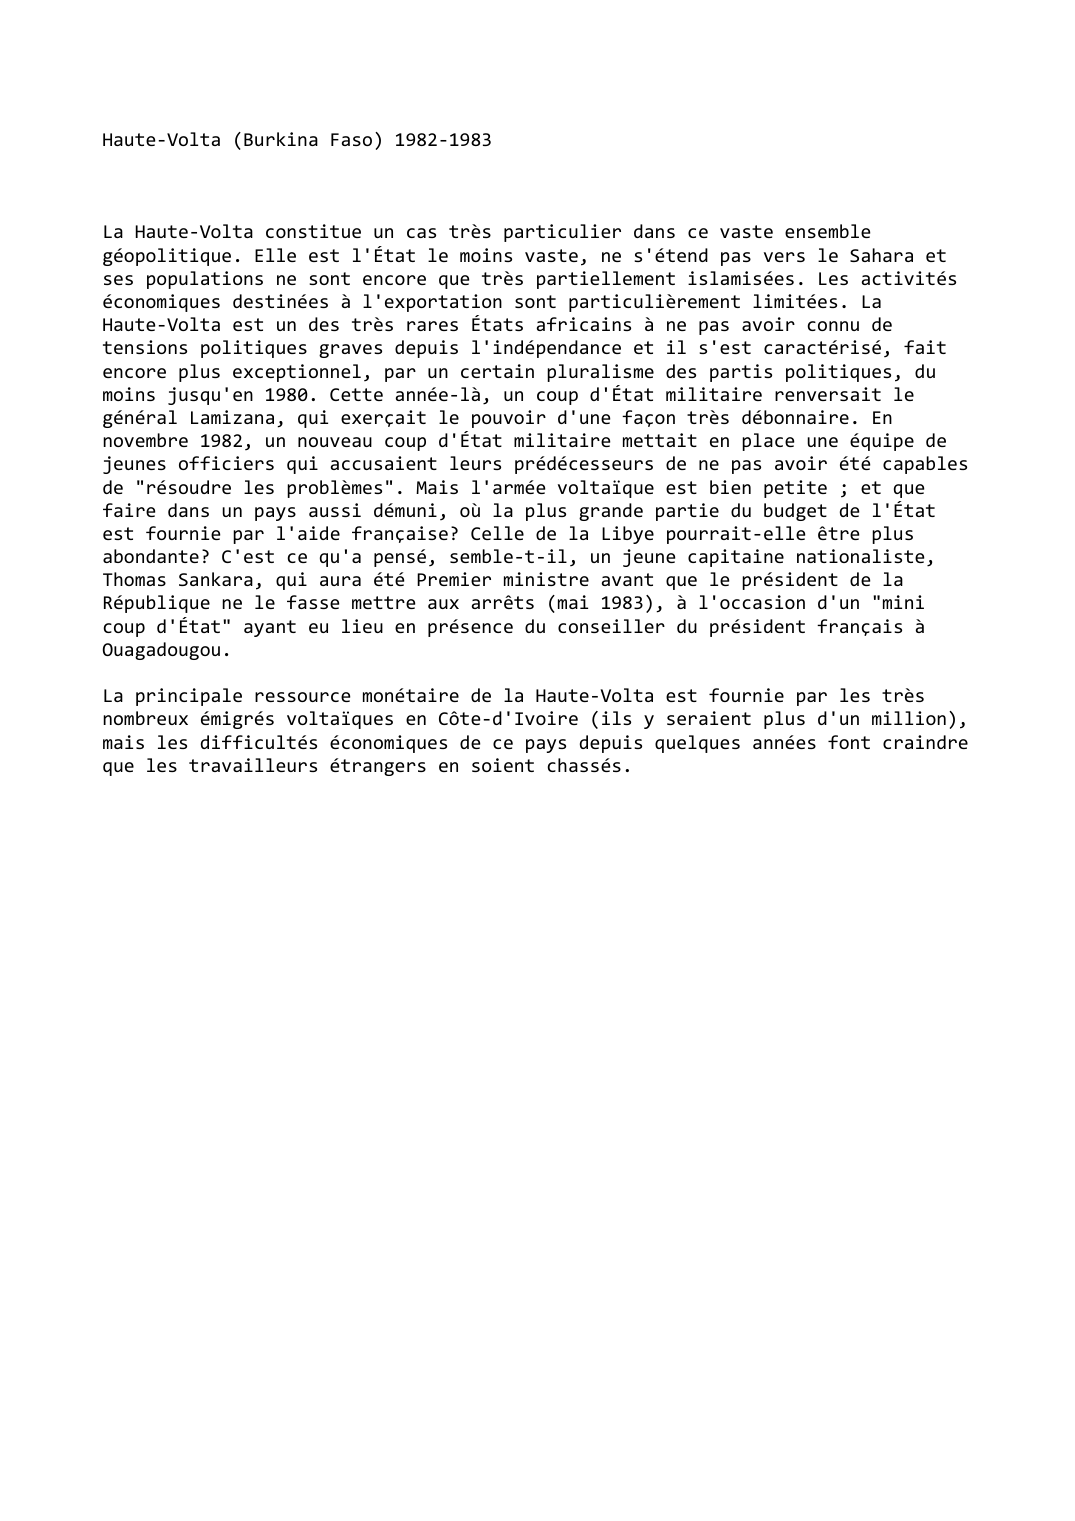 Prévisualisation du document Haute-Volta (Burkina Faso) - 1982-1983